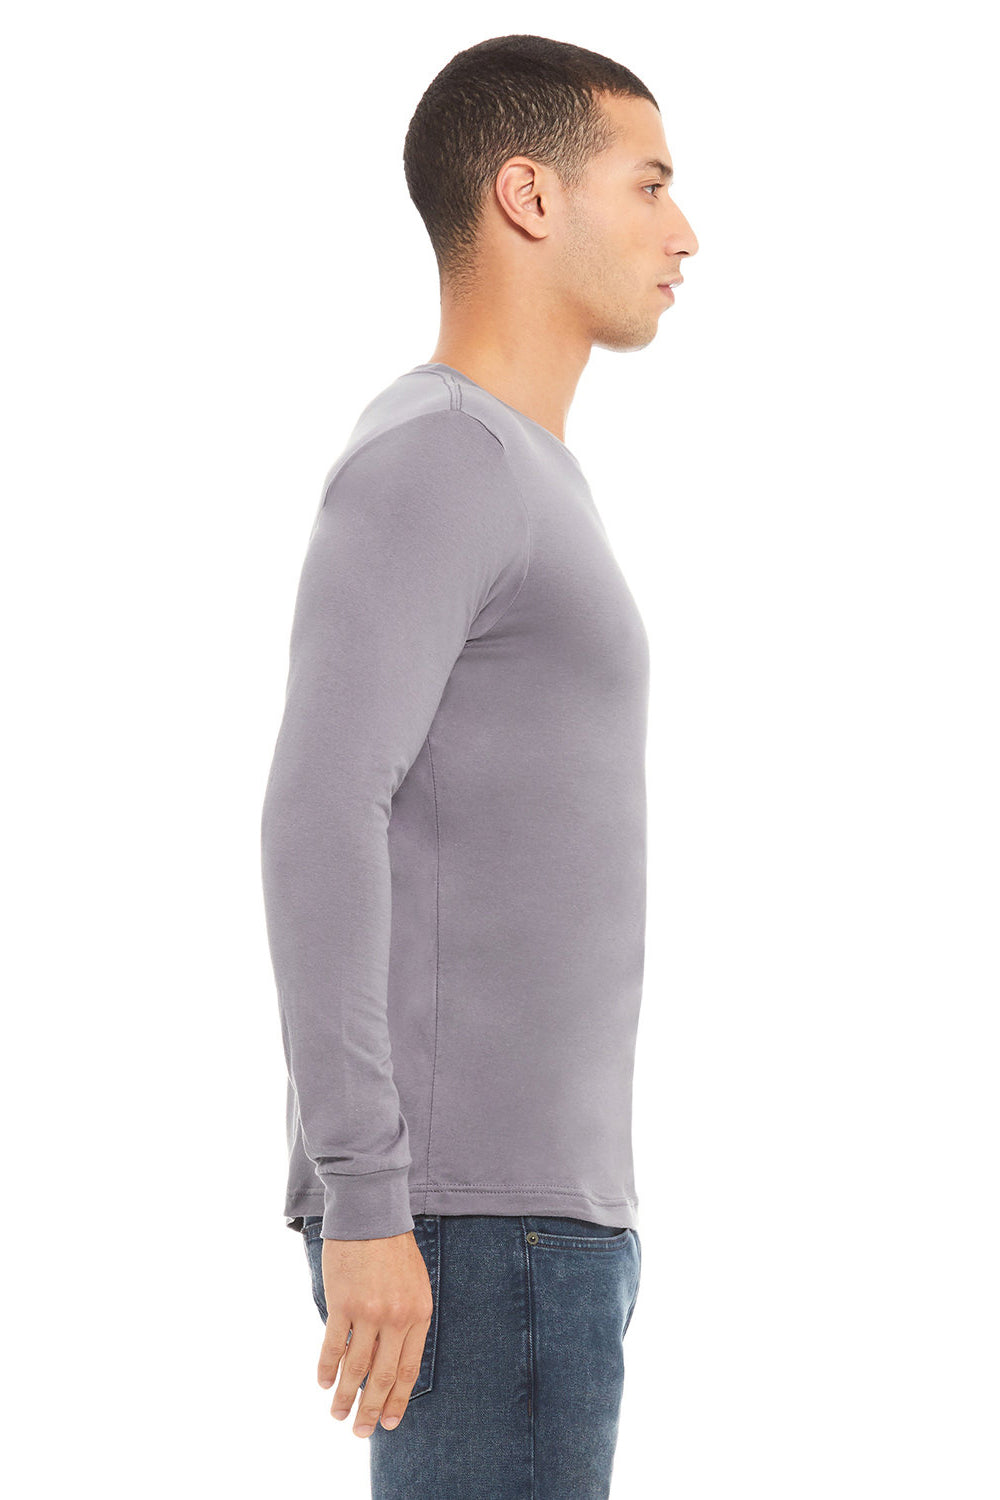 Bella + Canvas BC3501/3501 Mens Jersey Long Sleeve Crewneck T-Shirt Storm Grey Model Side